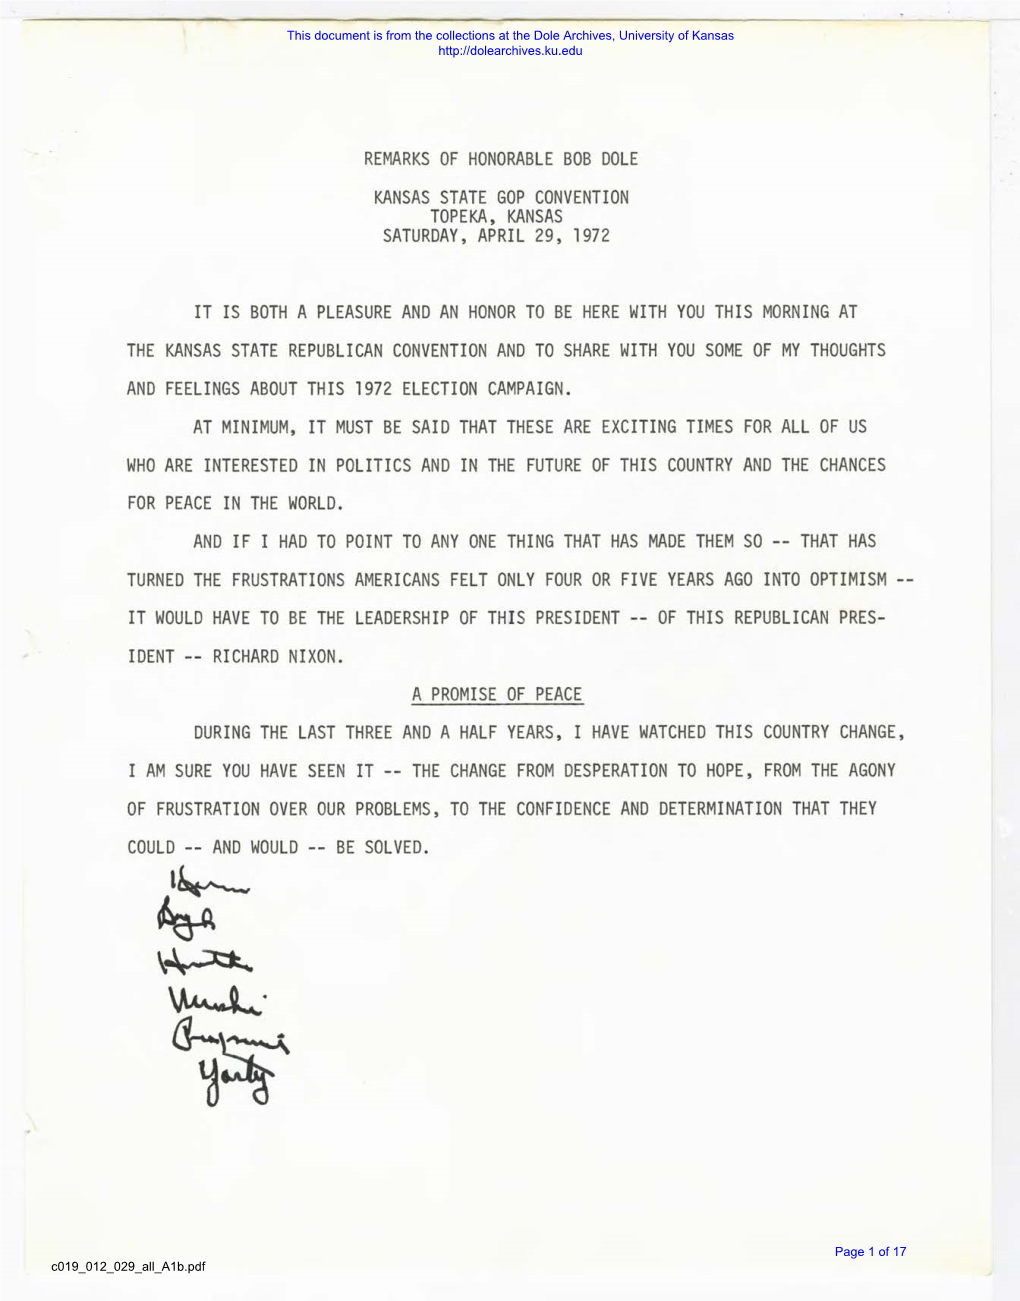 Remarks of Honorable Bob Dole Kansas State Gop Convention Topeka, Kansas Saturday, April 29, 1972